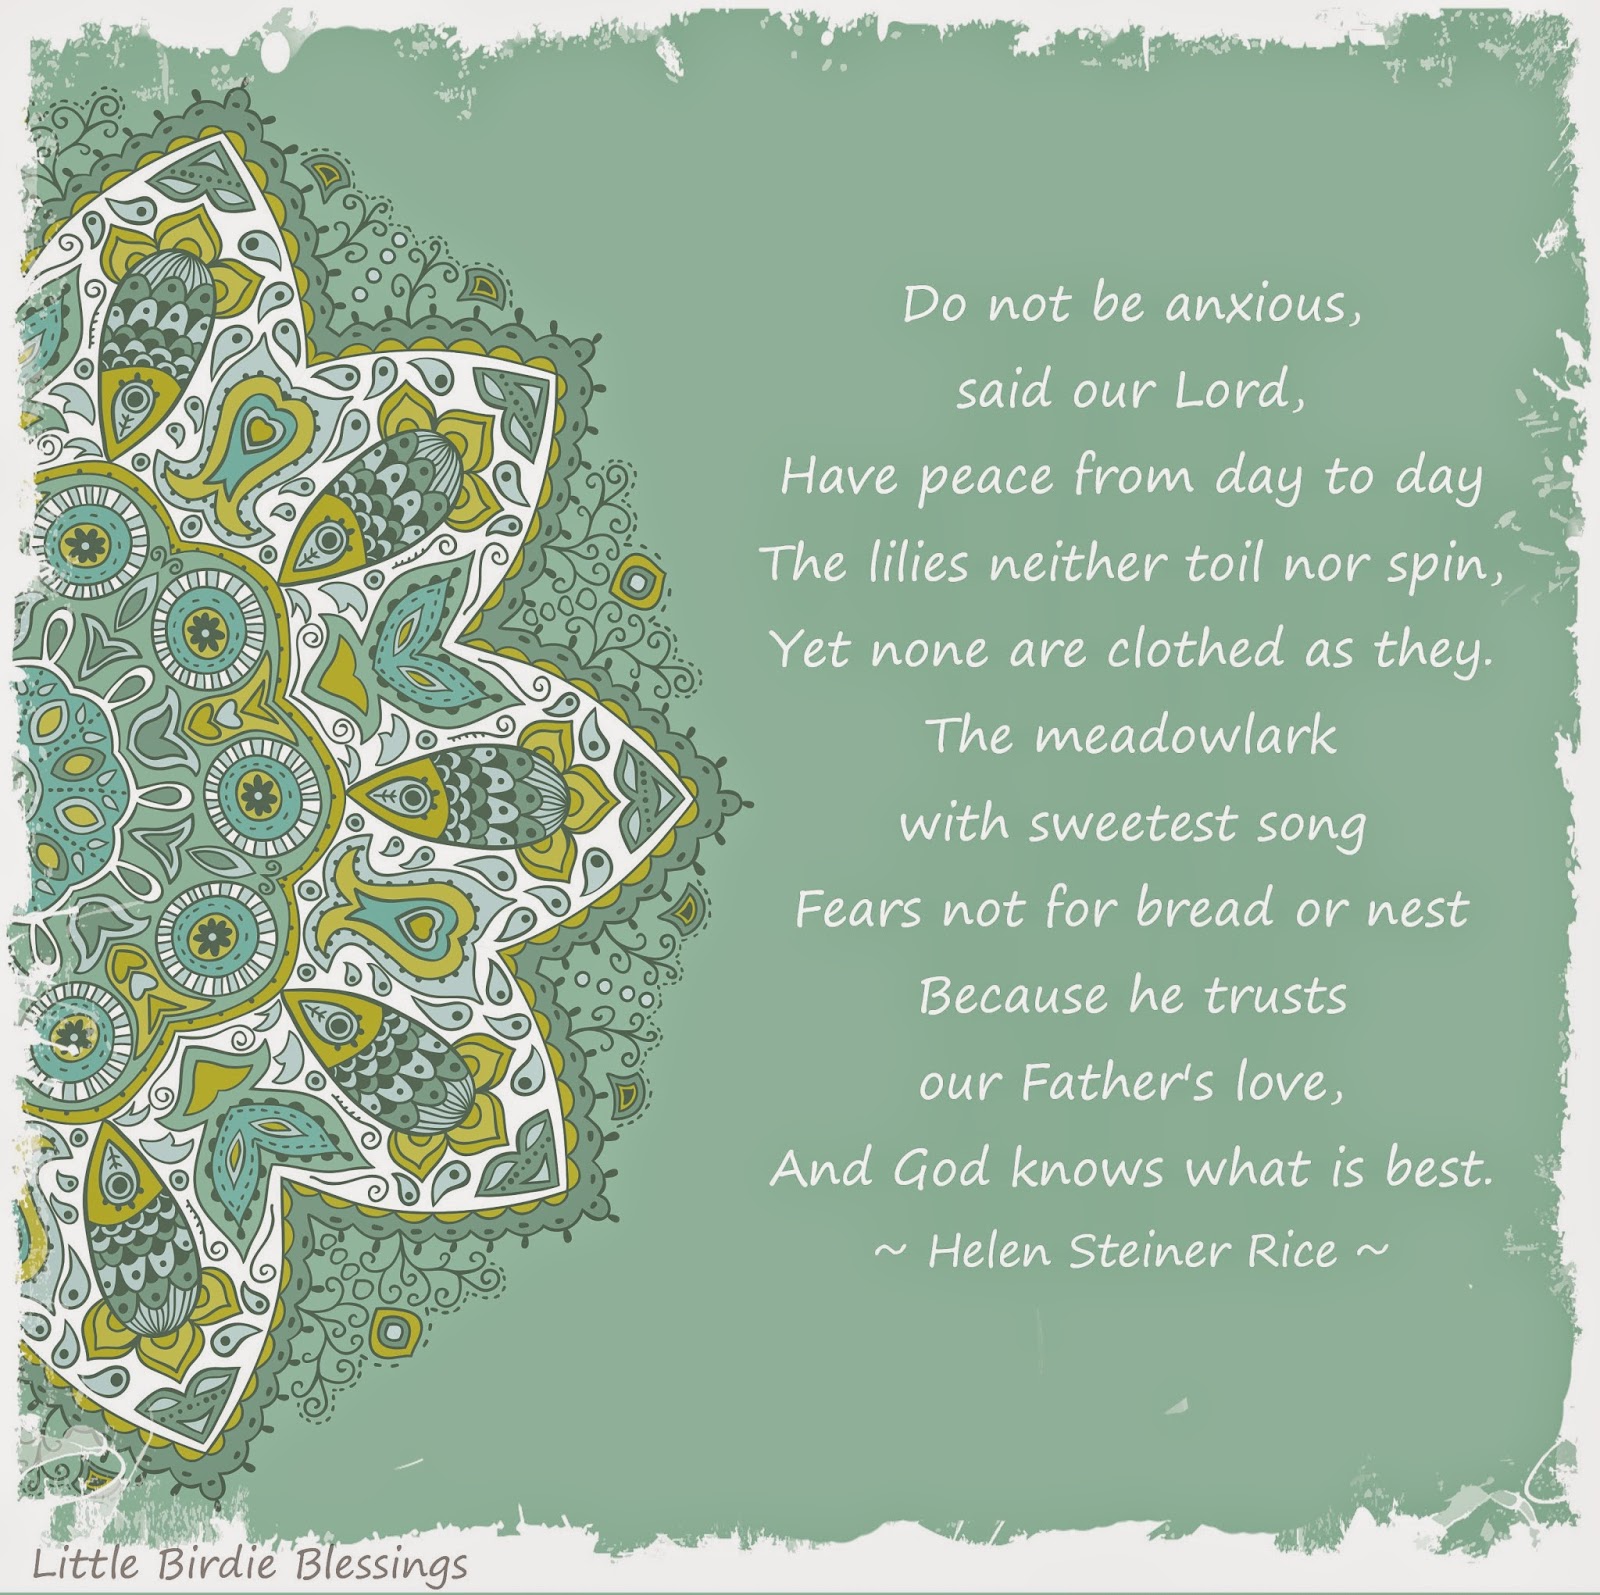 Little Birdie Blessings : Poem for Anxiety ~ Helen Steiner Rice